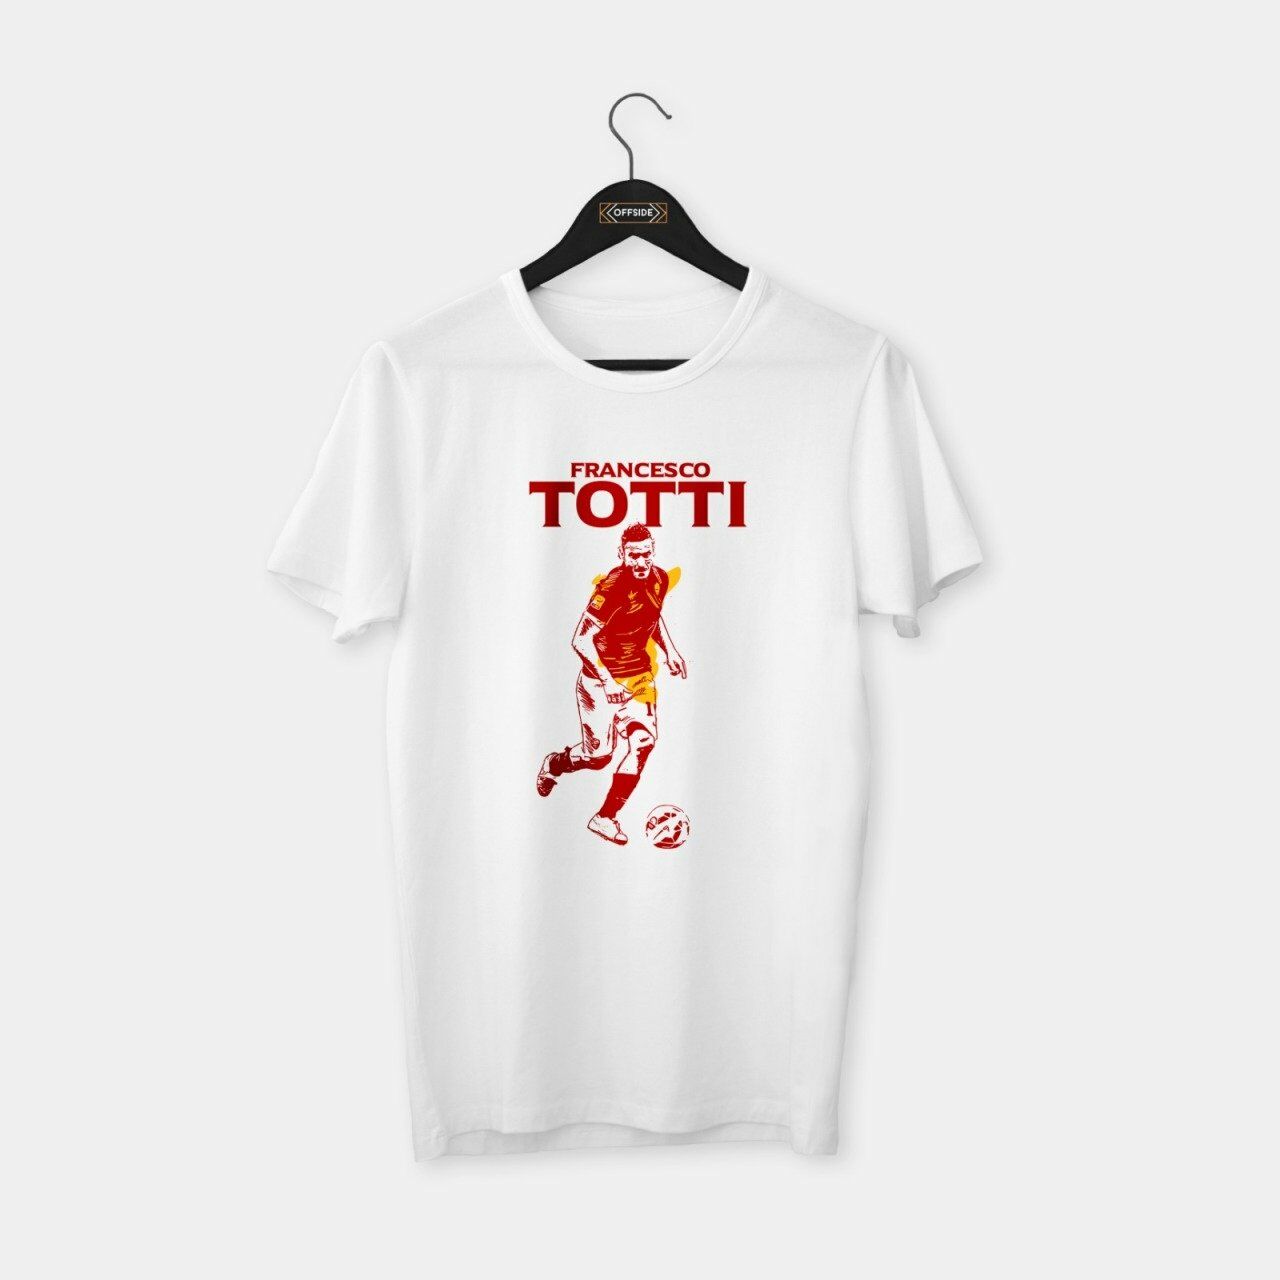 Totti T-shirt